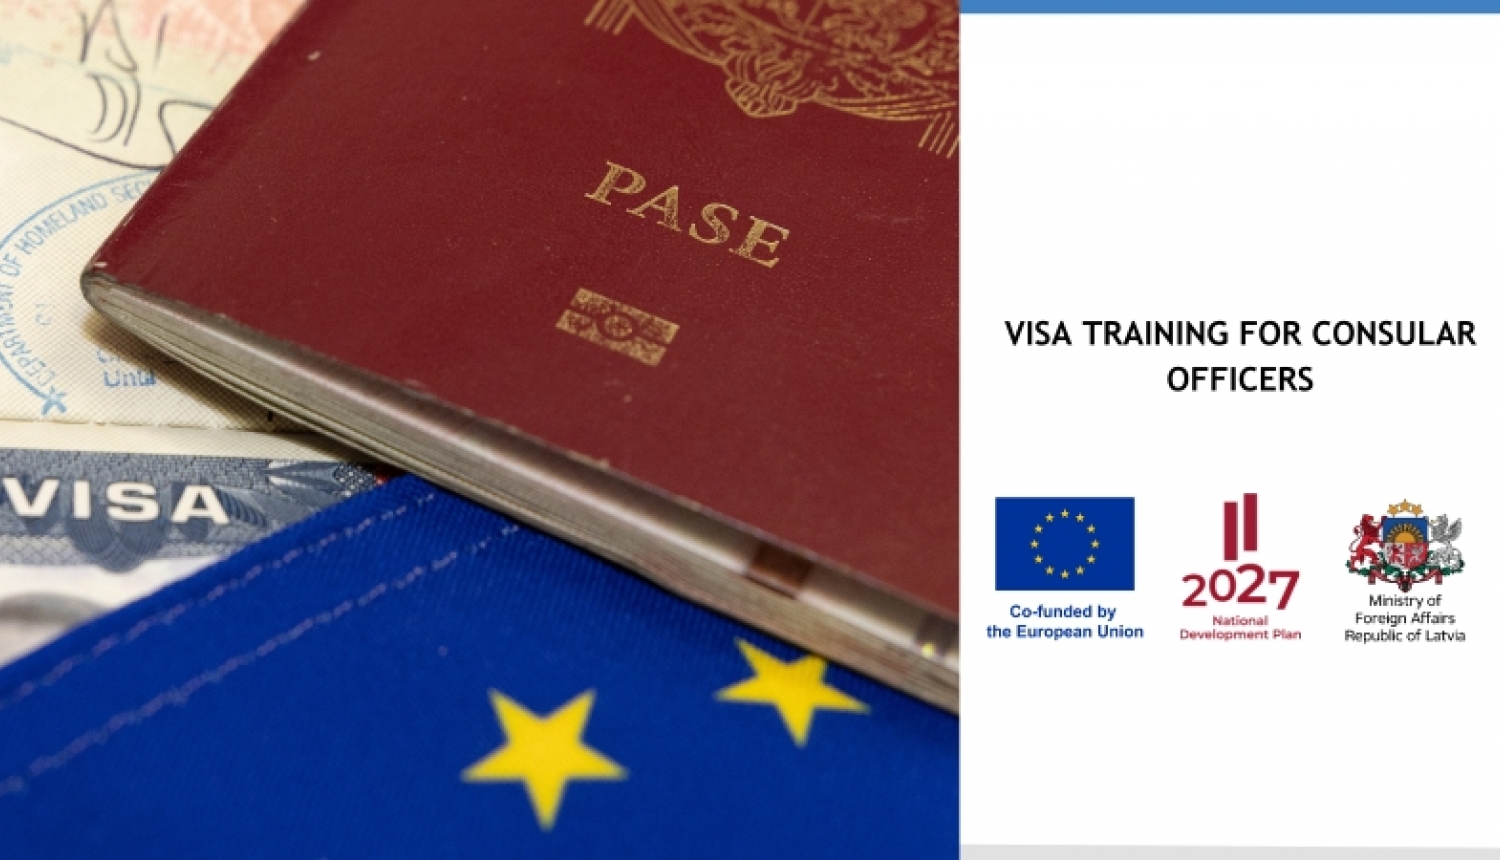 Visa training for consular officers